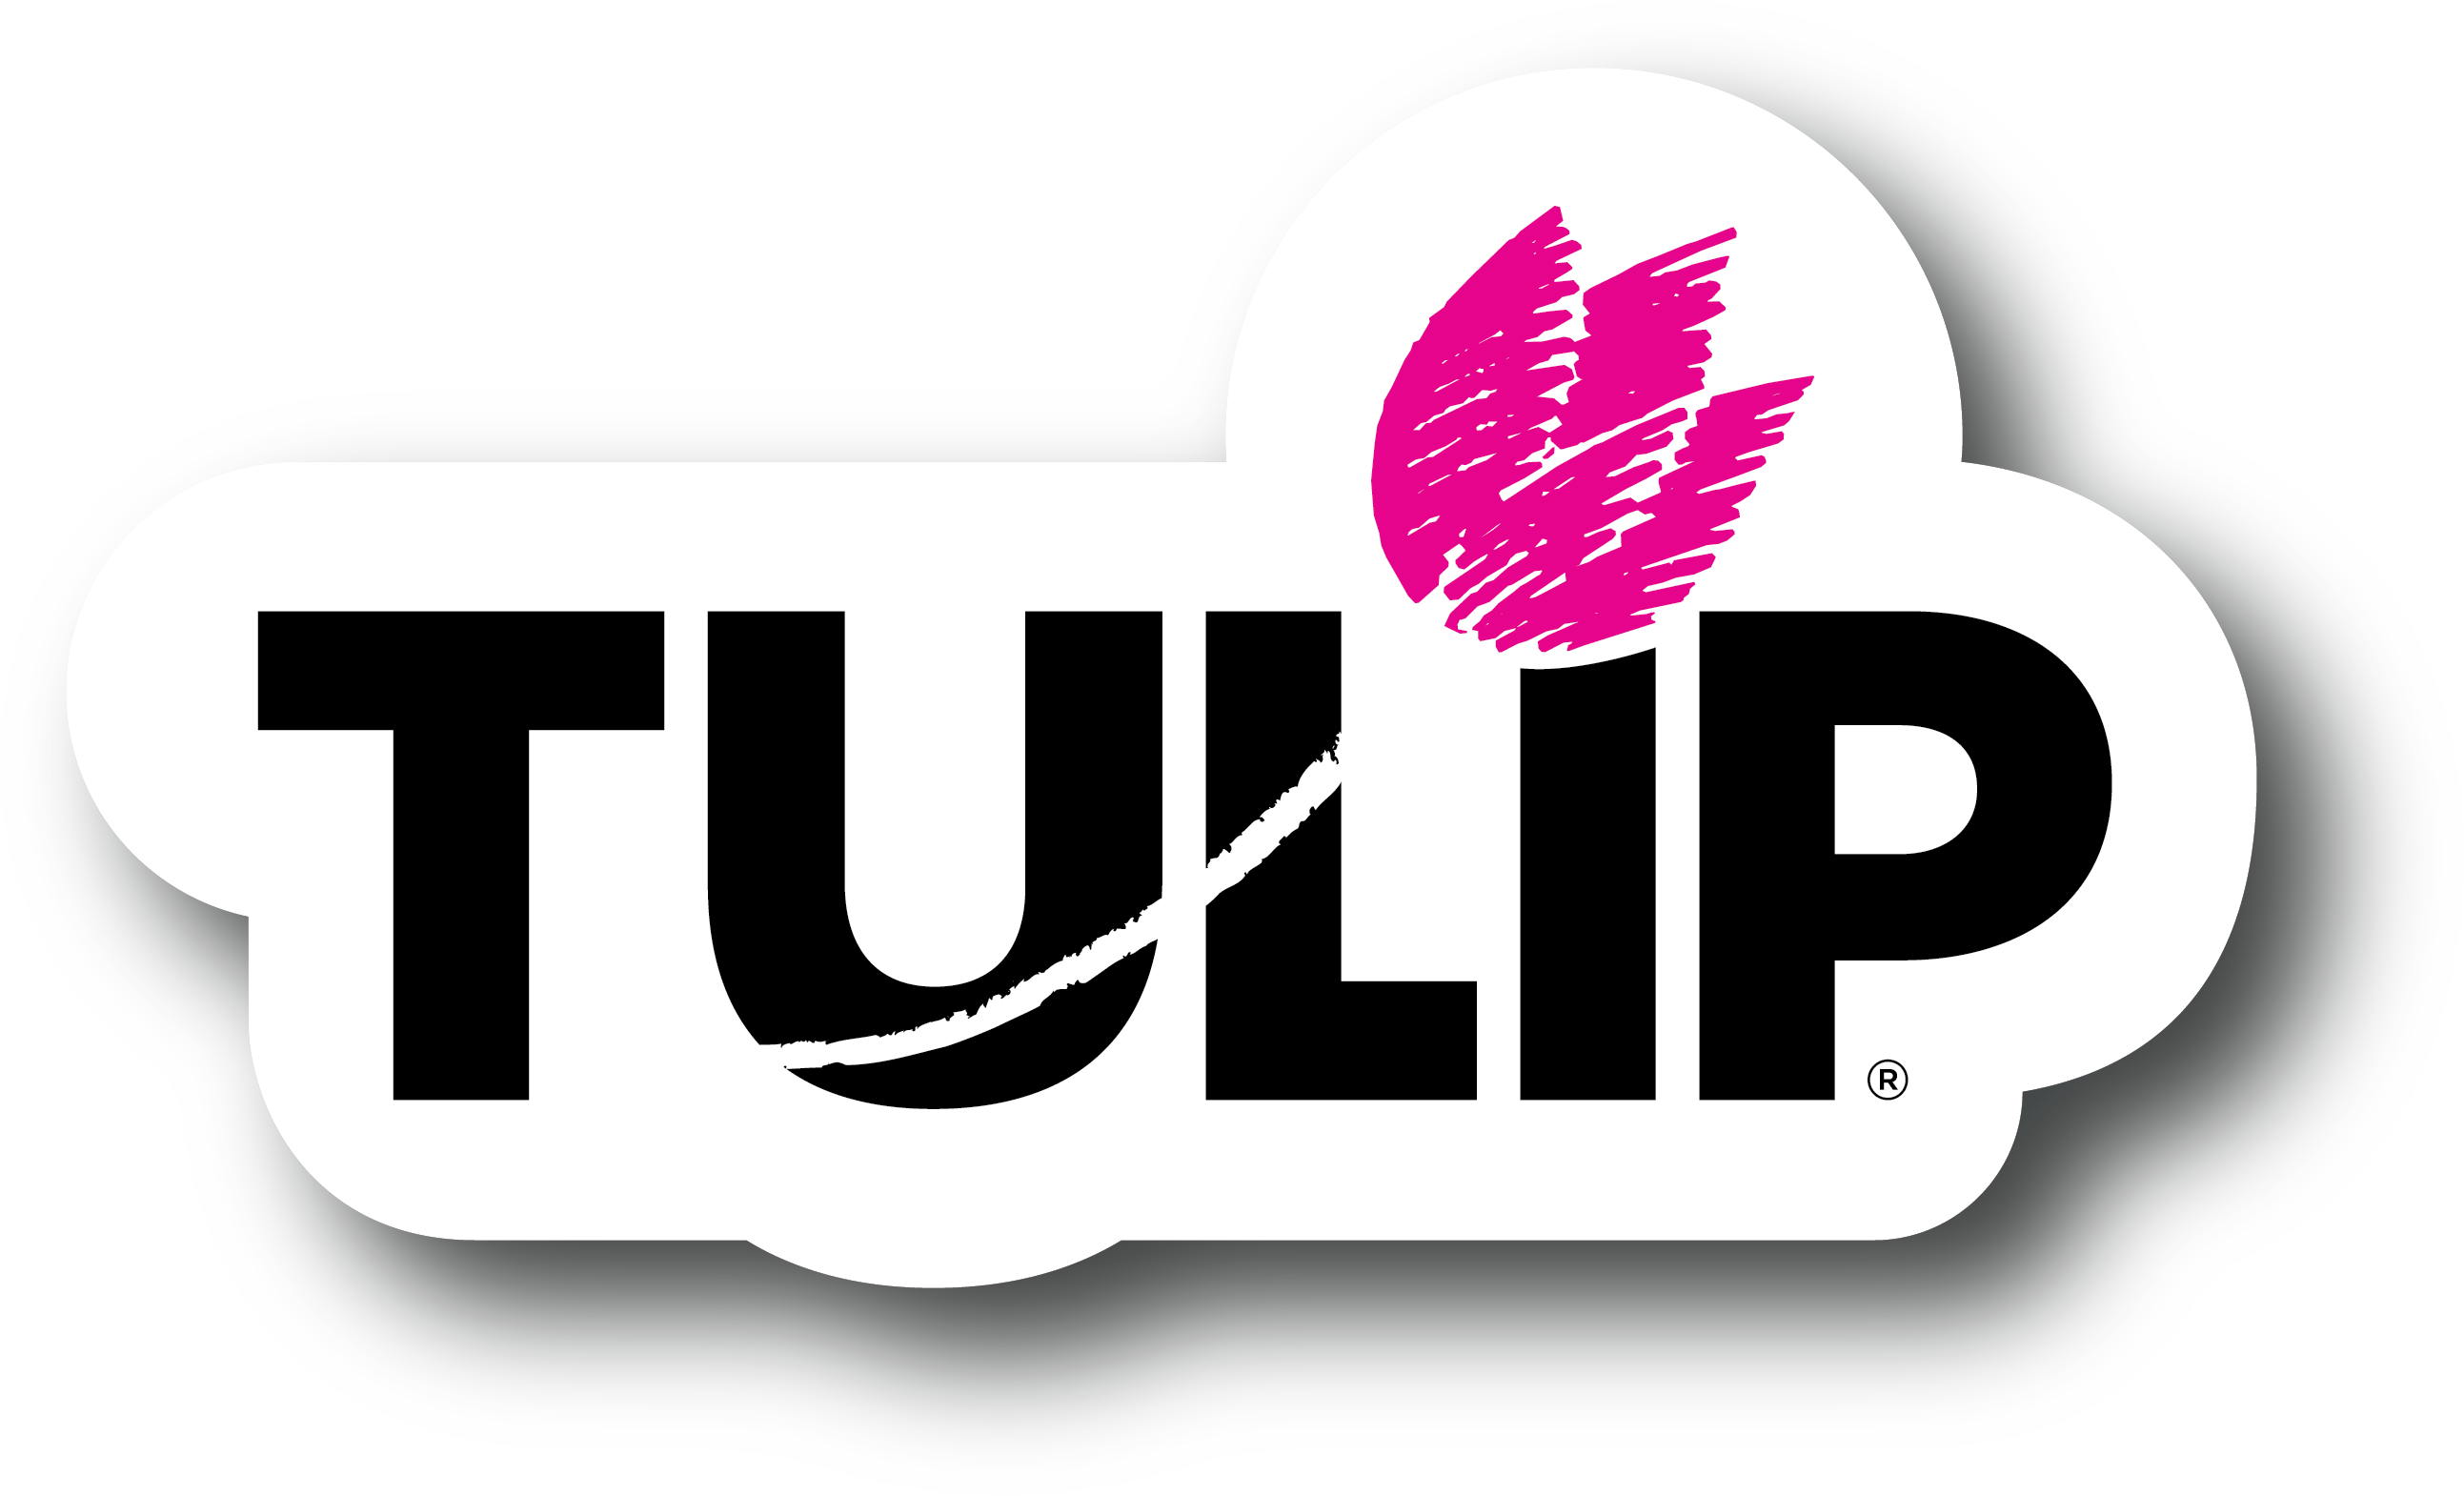 Tulip Dimensional Fabric Paint Glitter 1.25 fl oz 6 Pack